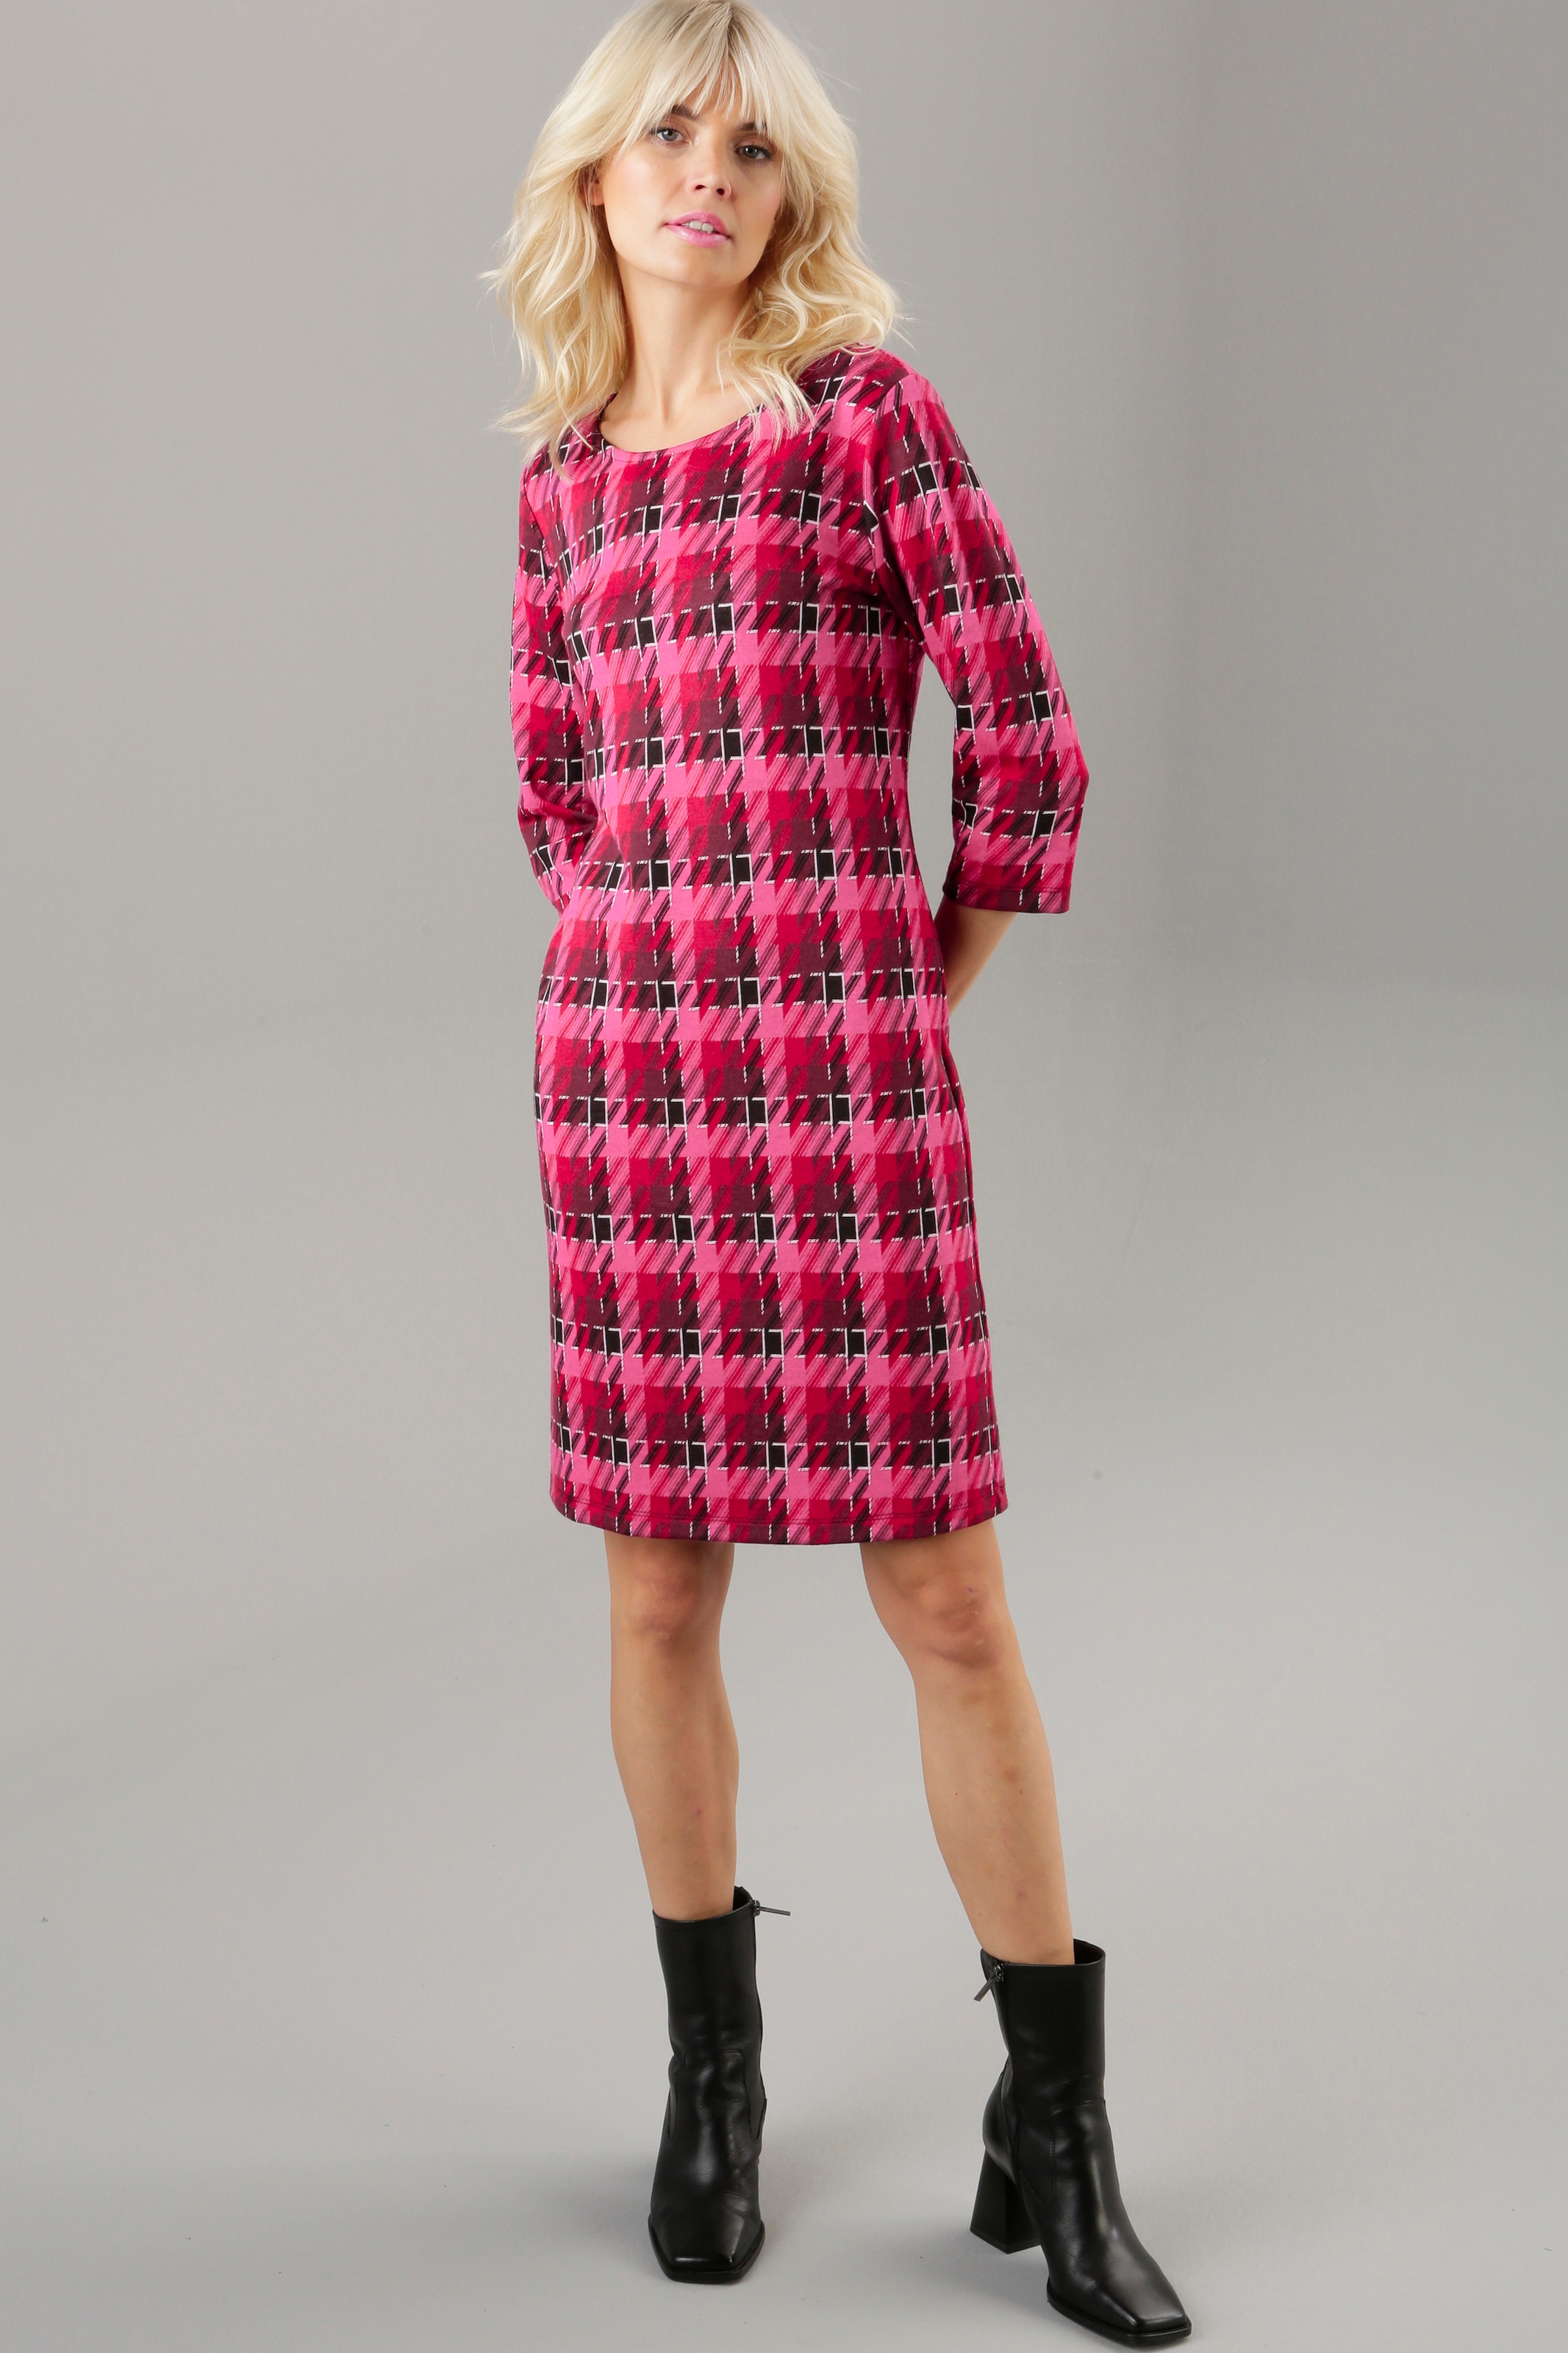 Allover-Muster - Aniston Jerseykleid KOLLEKTION SELECTED trendy NEUE Knallfarben in mit